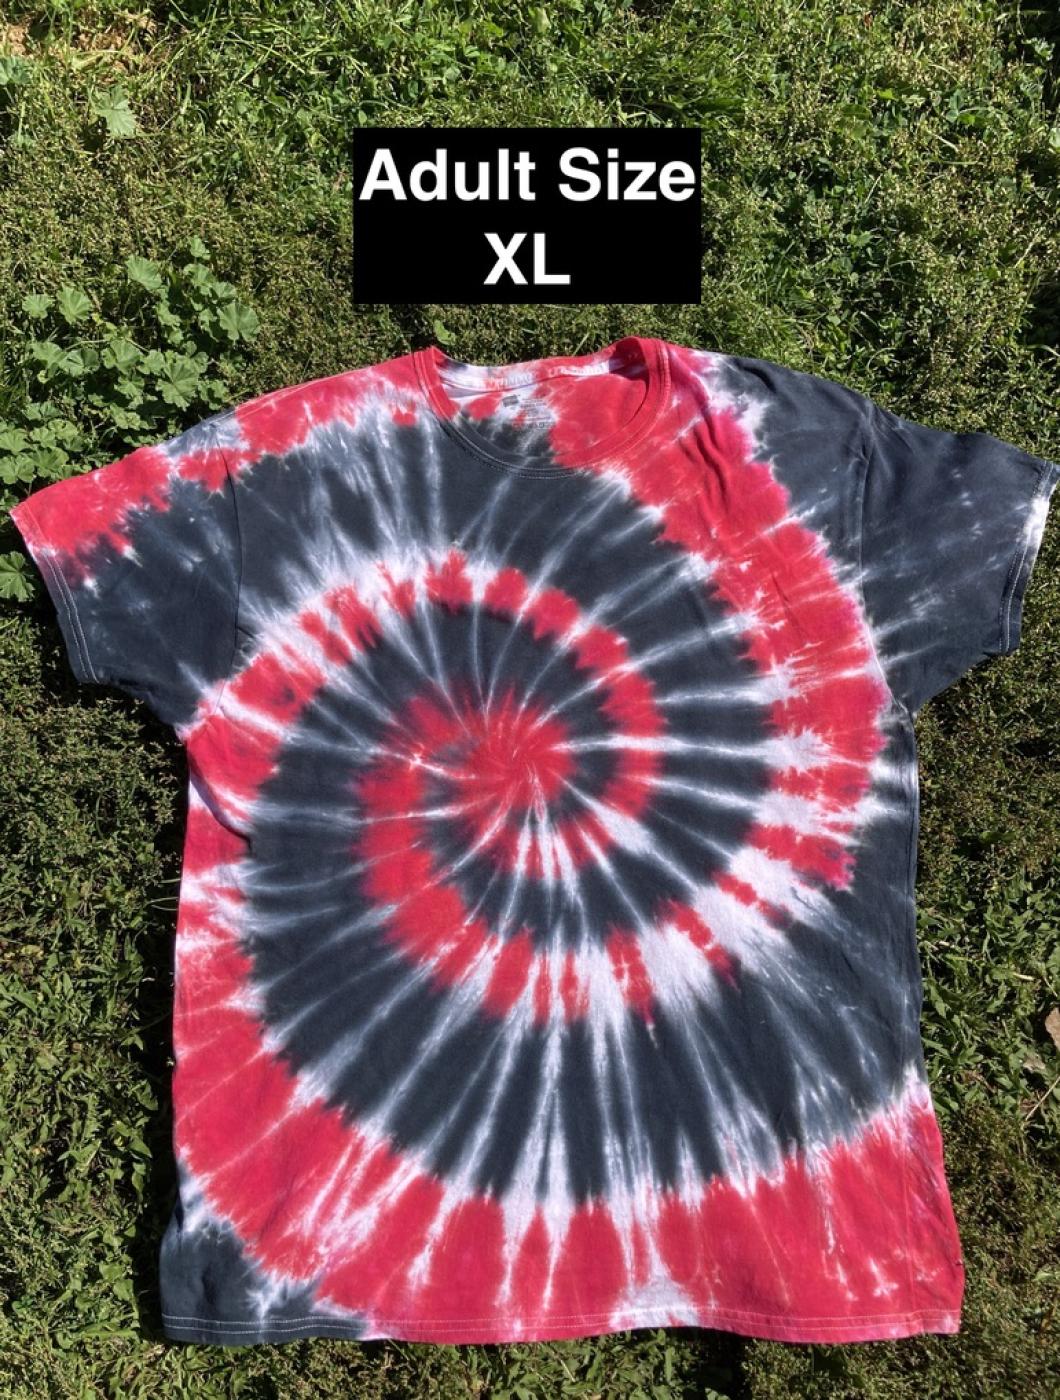 Red Black Spiral Adult XL Tie Dye T Shirt